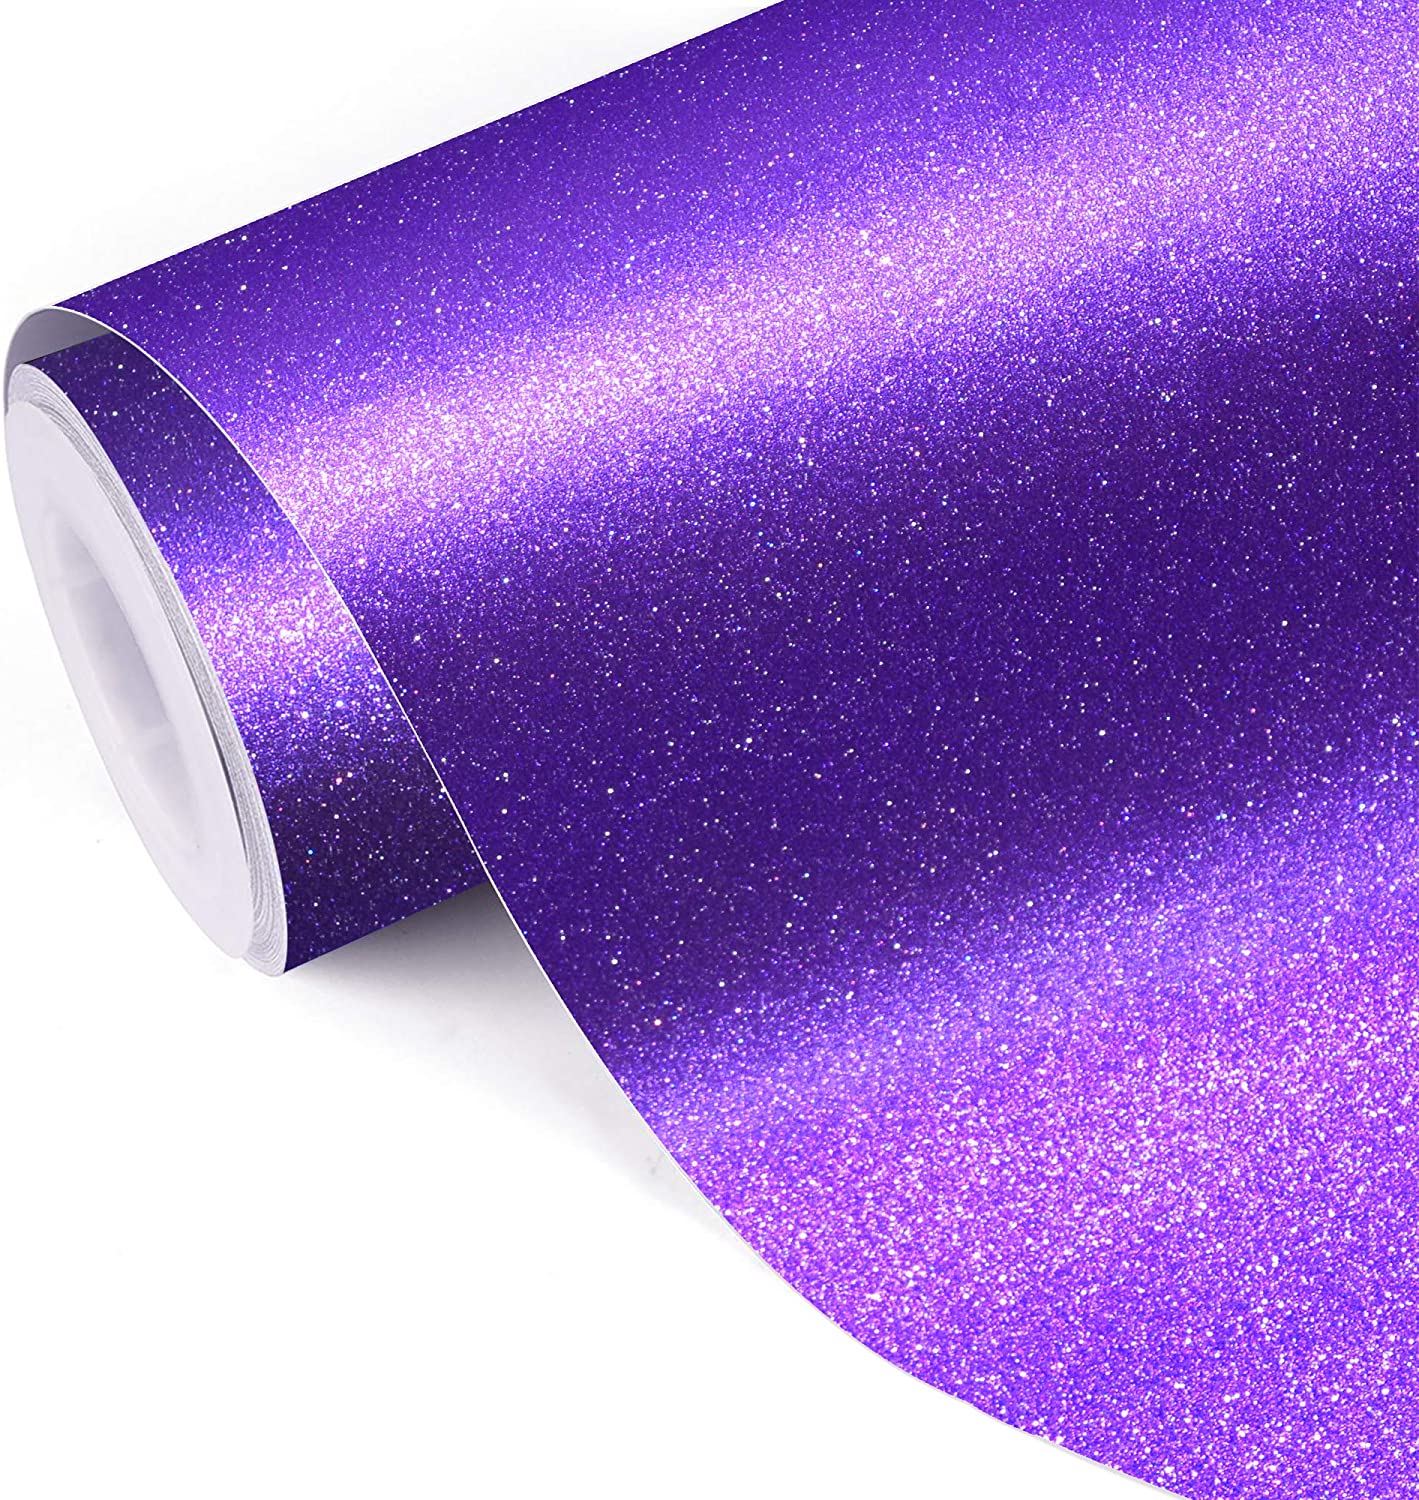 Glitter self adhesive craft sticker vinyl purple color